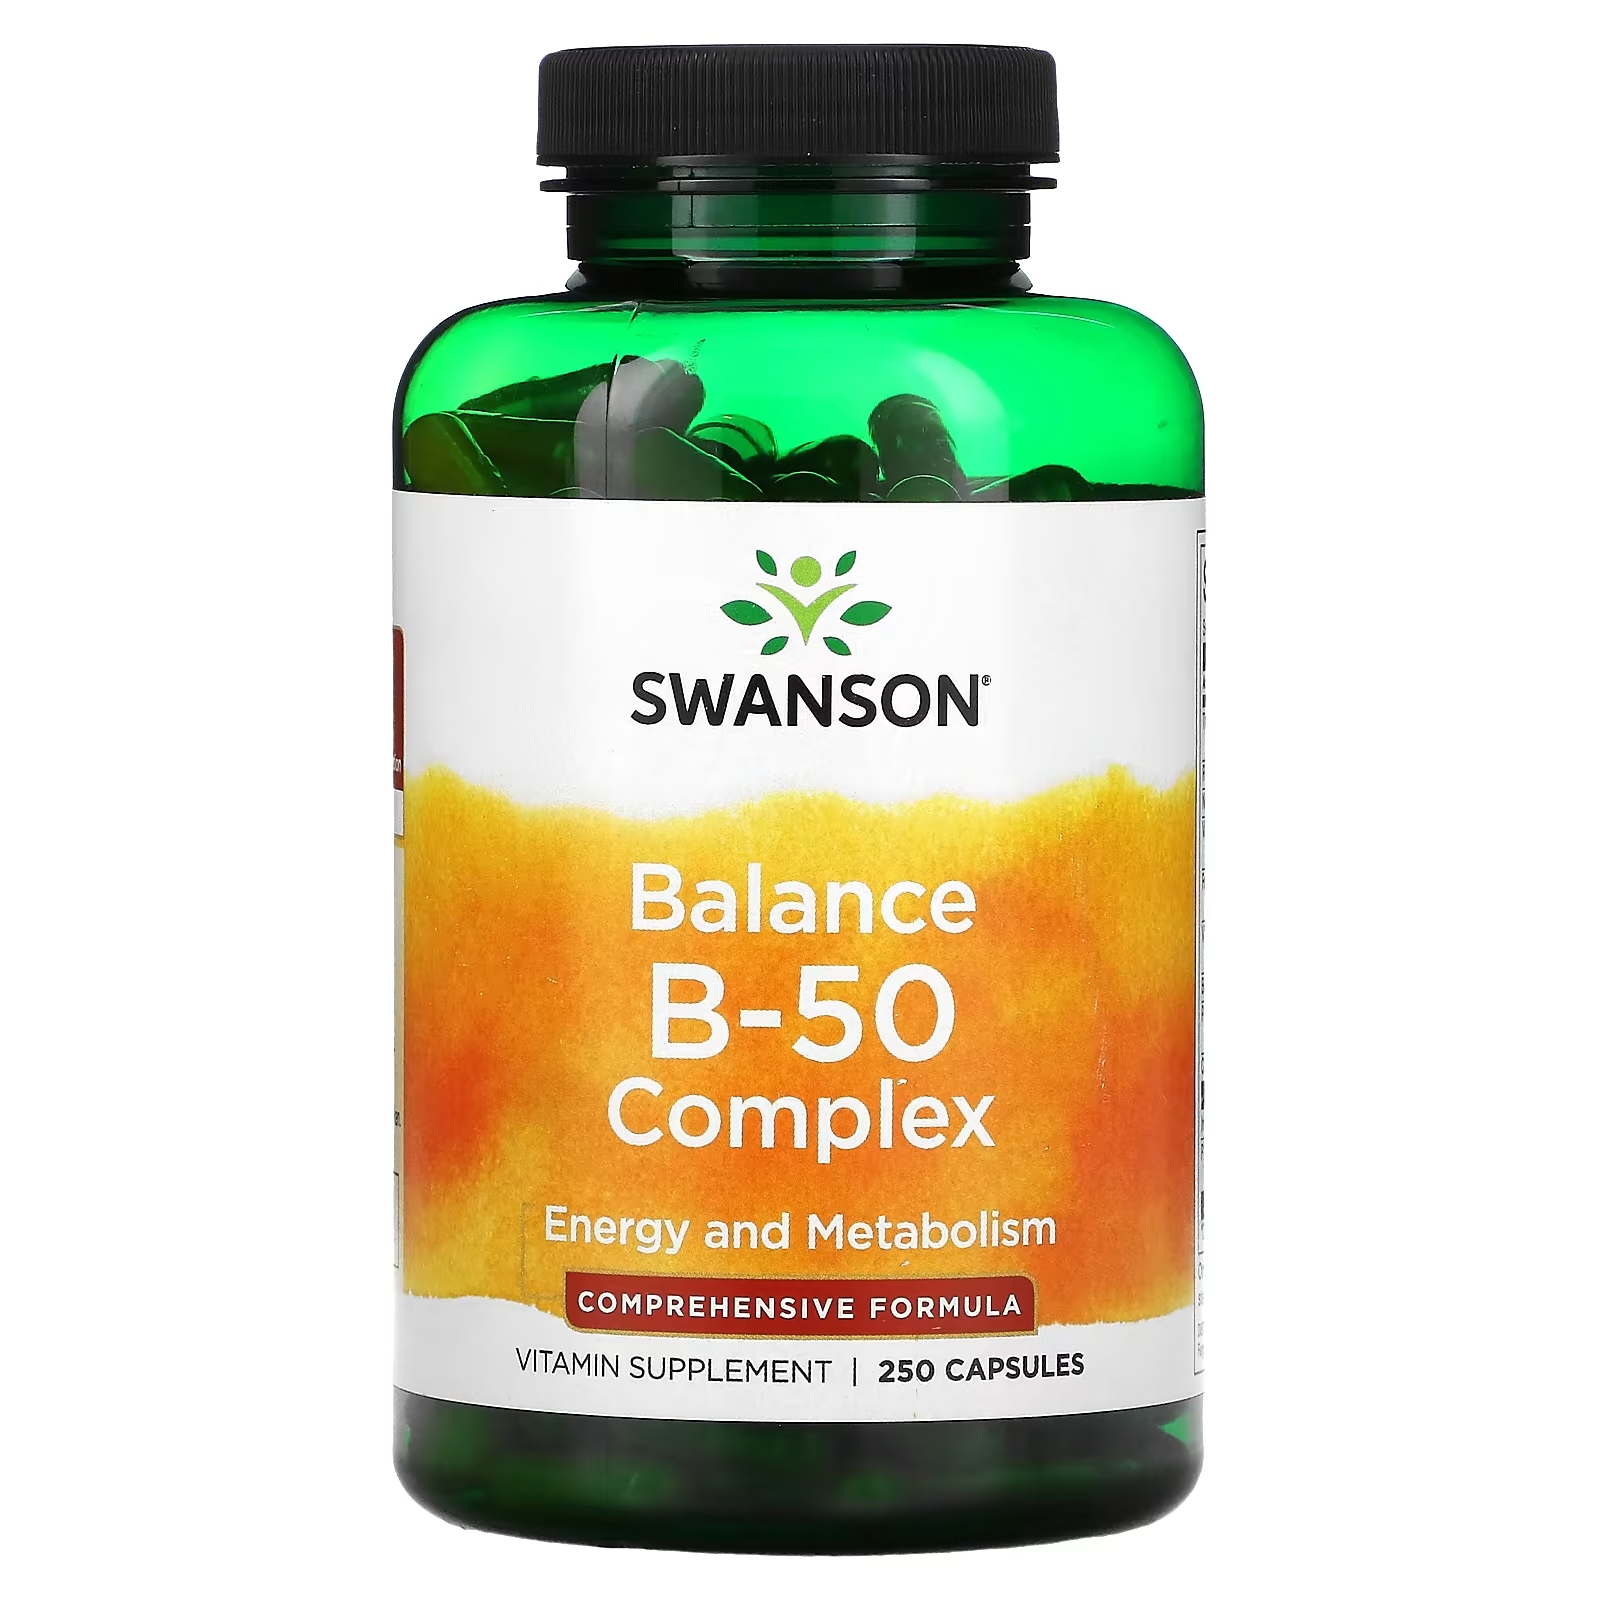 Мультивитаминный Комплекс Swanson Balance B-50, 250 капсул swanson balance b 50 complex 250 капсул